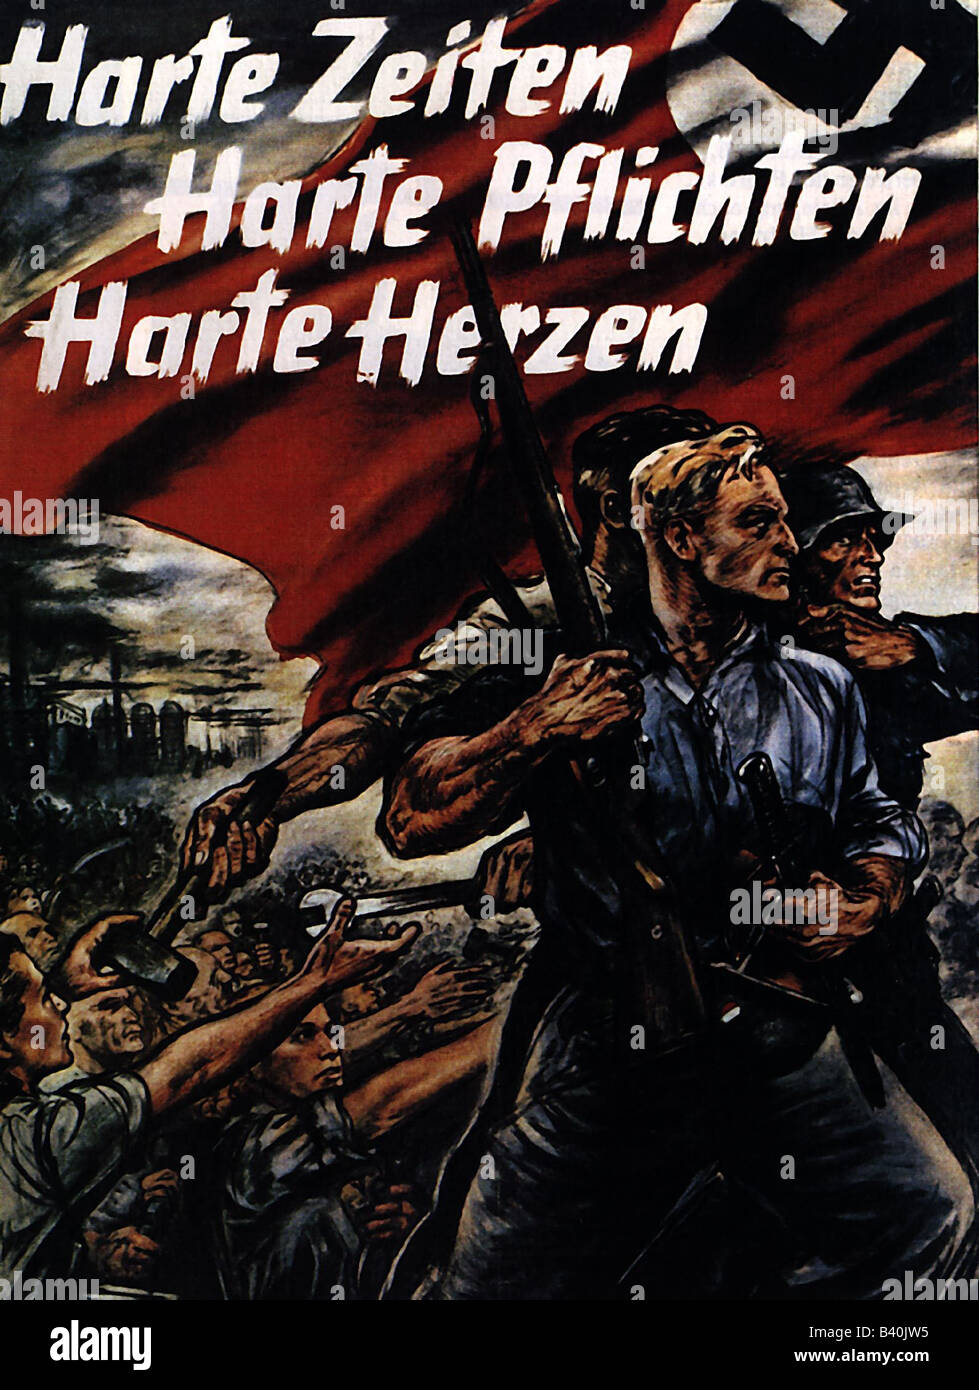 events, Second World War / WWII, propaganda, Germany, poster 'Harte Zeiten, Harte Pflichten, harte Herzen' (Hard times, hard duties, hard hearts), 1942, Stock Photo